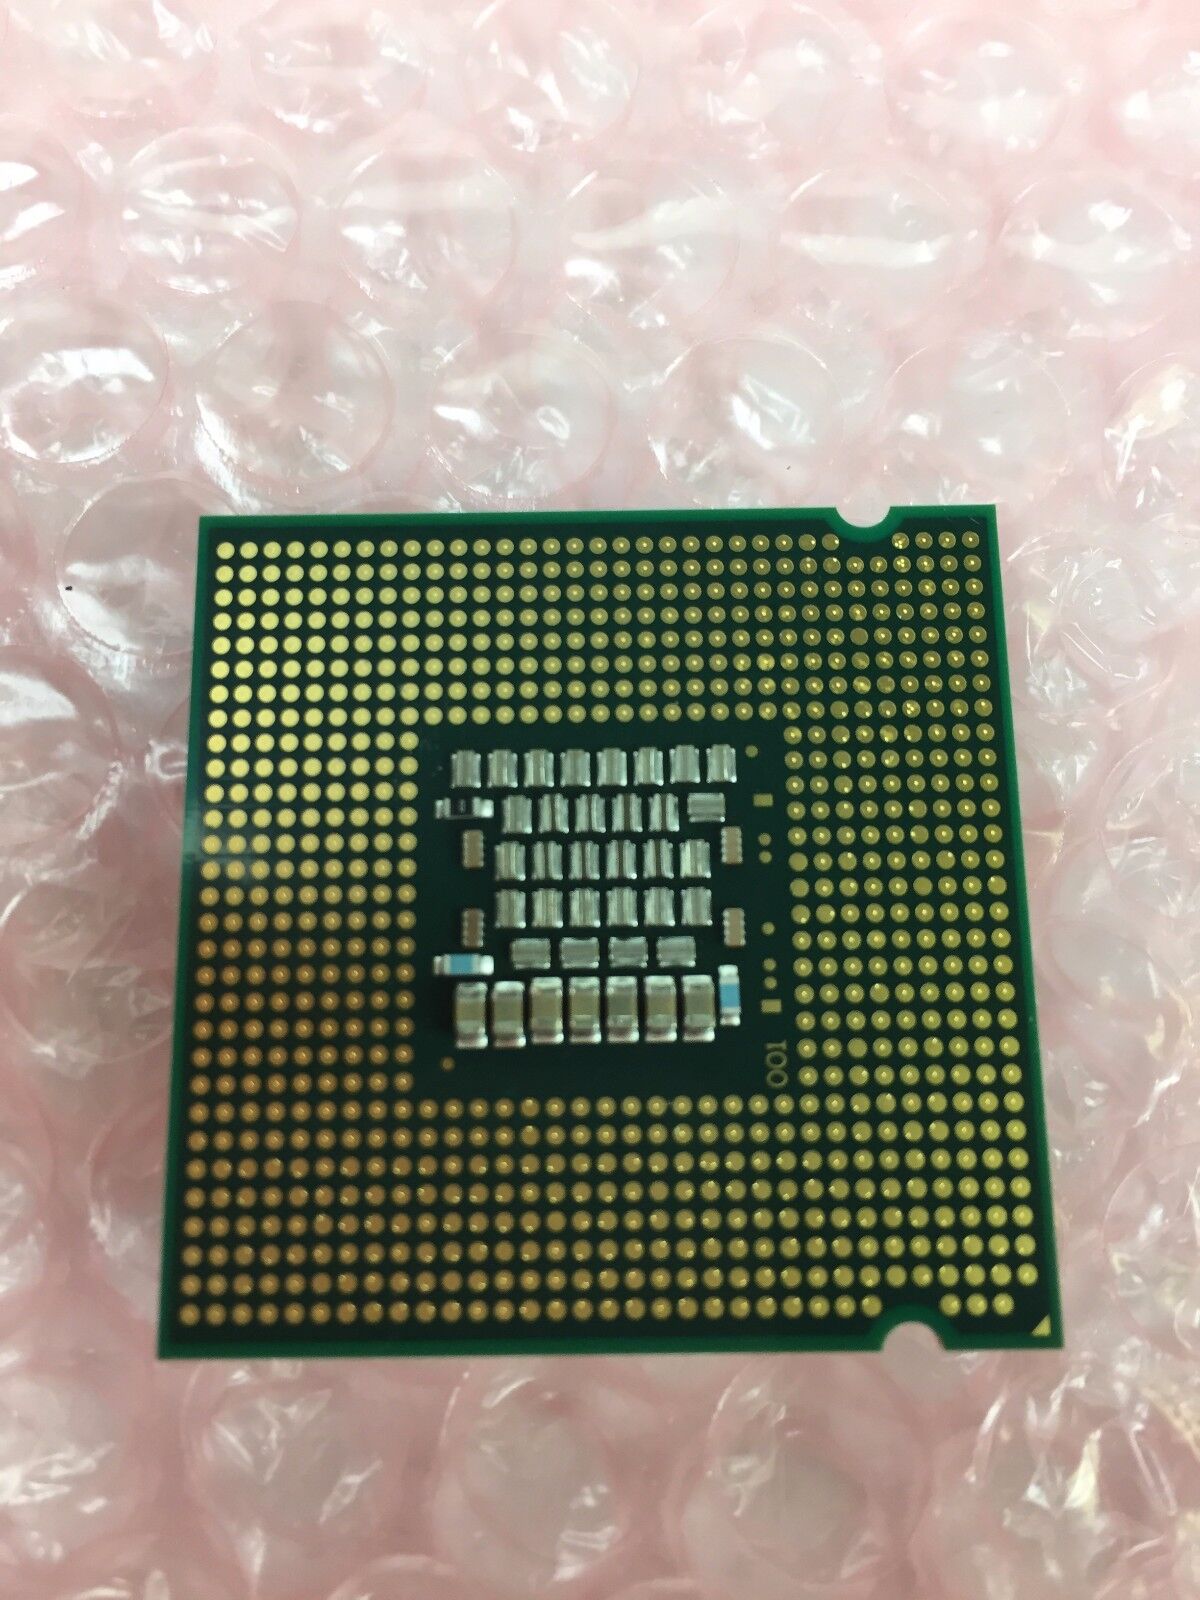 Intel SLA9X Core 2 Duo 2.33GHz 4MB 1333MHz Socket LGA775 Desktop CPU